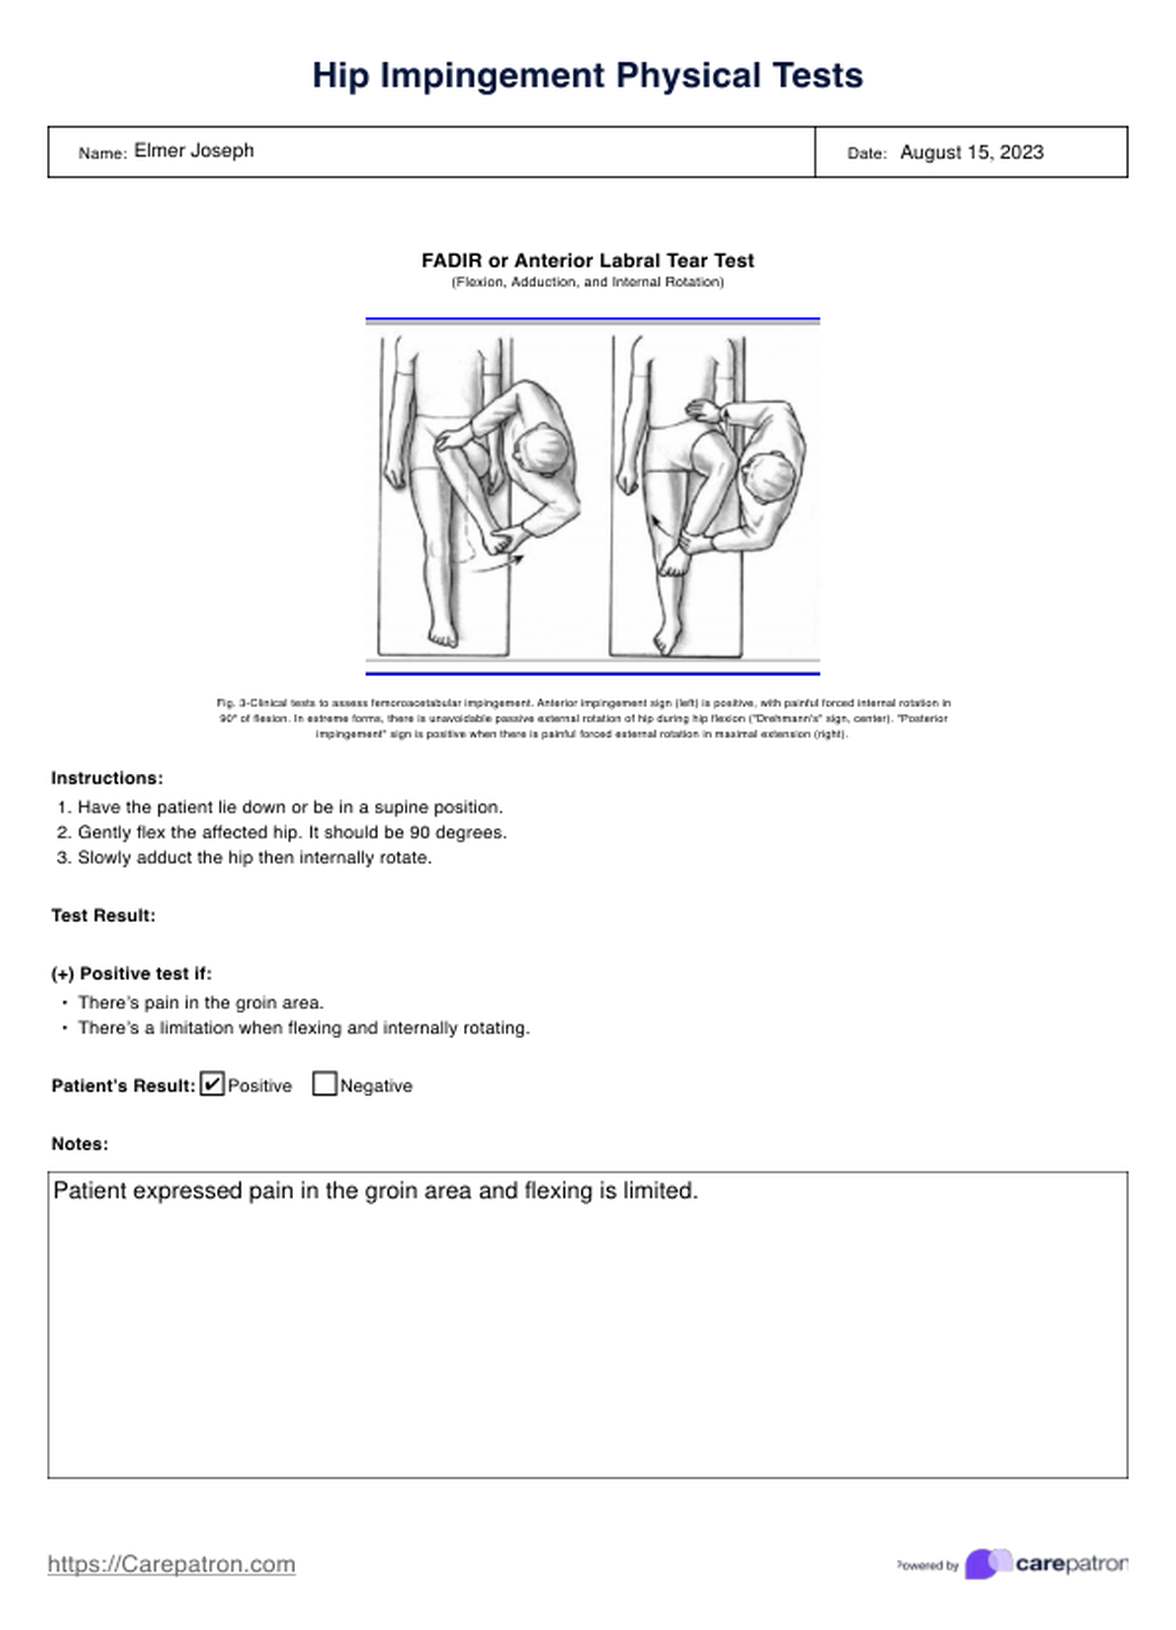 Hip Impingement Tests PDF Example